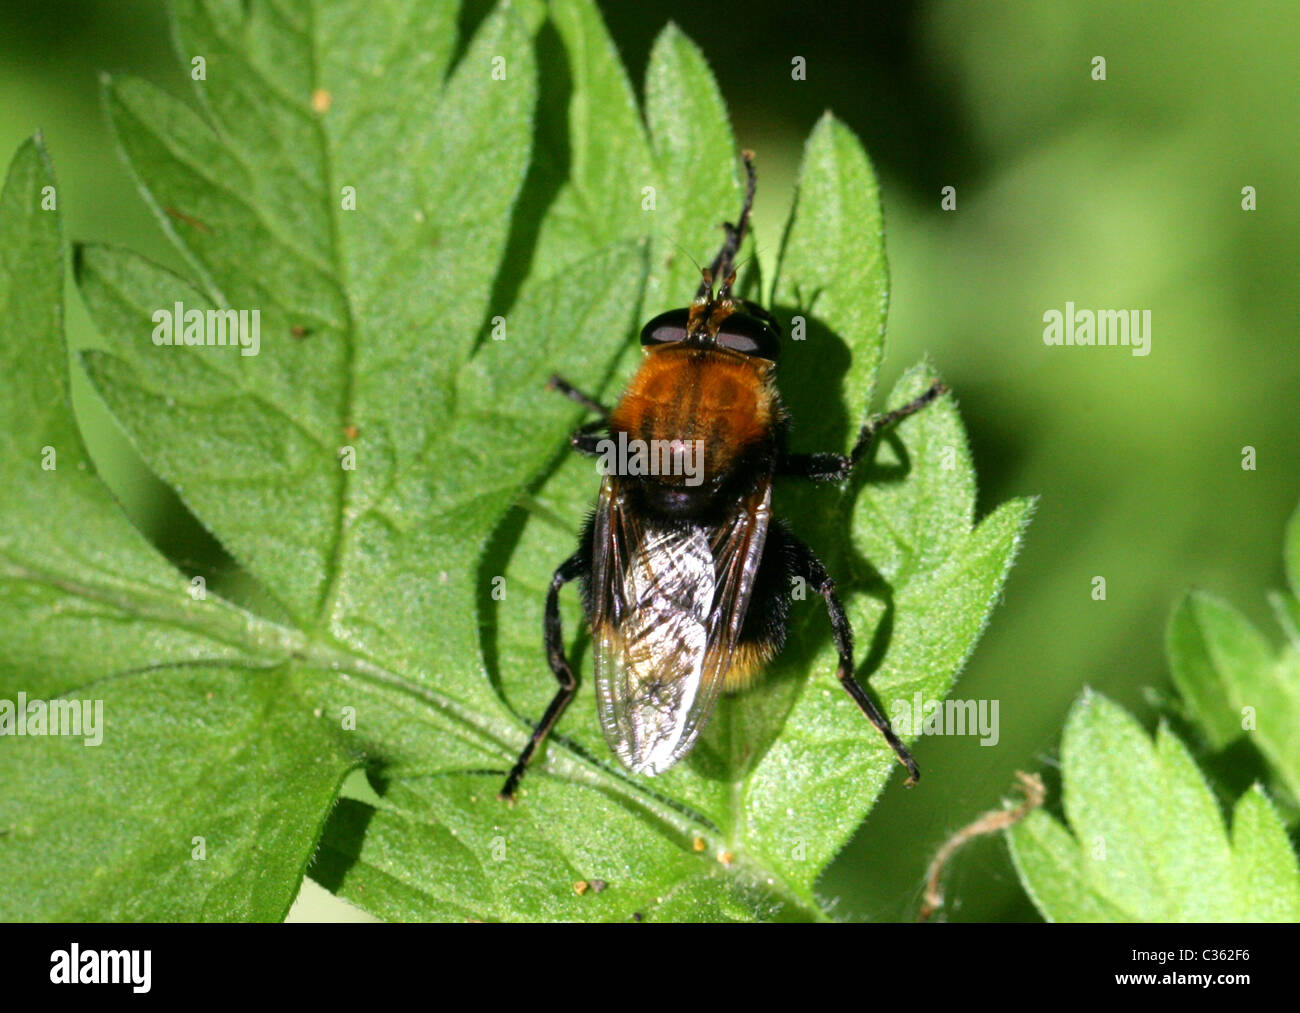 Hoverfly, Criorhina berberina, Syrphidae, Diptera. Syn. Criorhina oxyacanthae, Eristalis berberina. Bee Mimic. Stock Photo